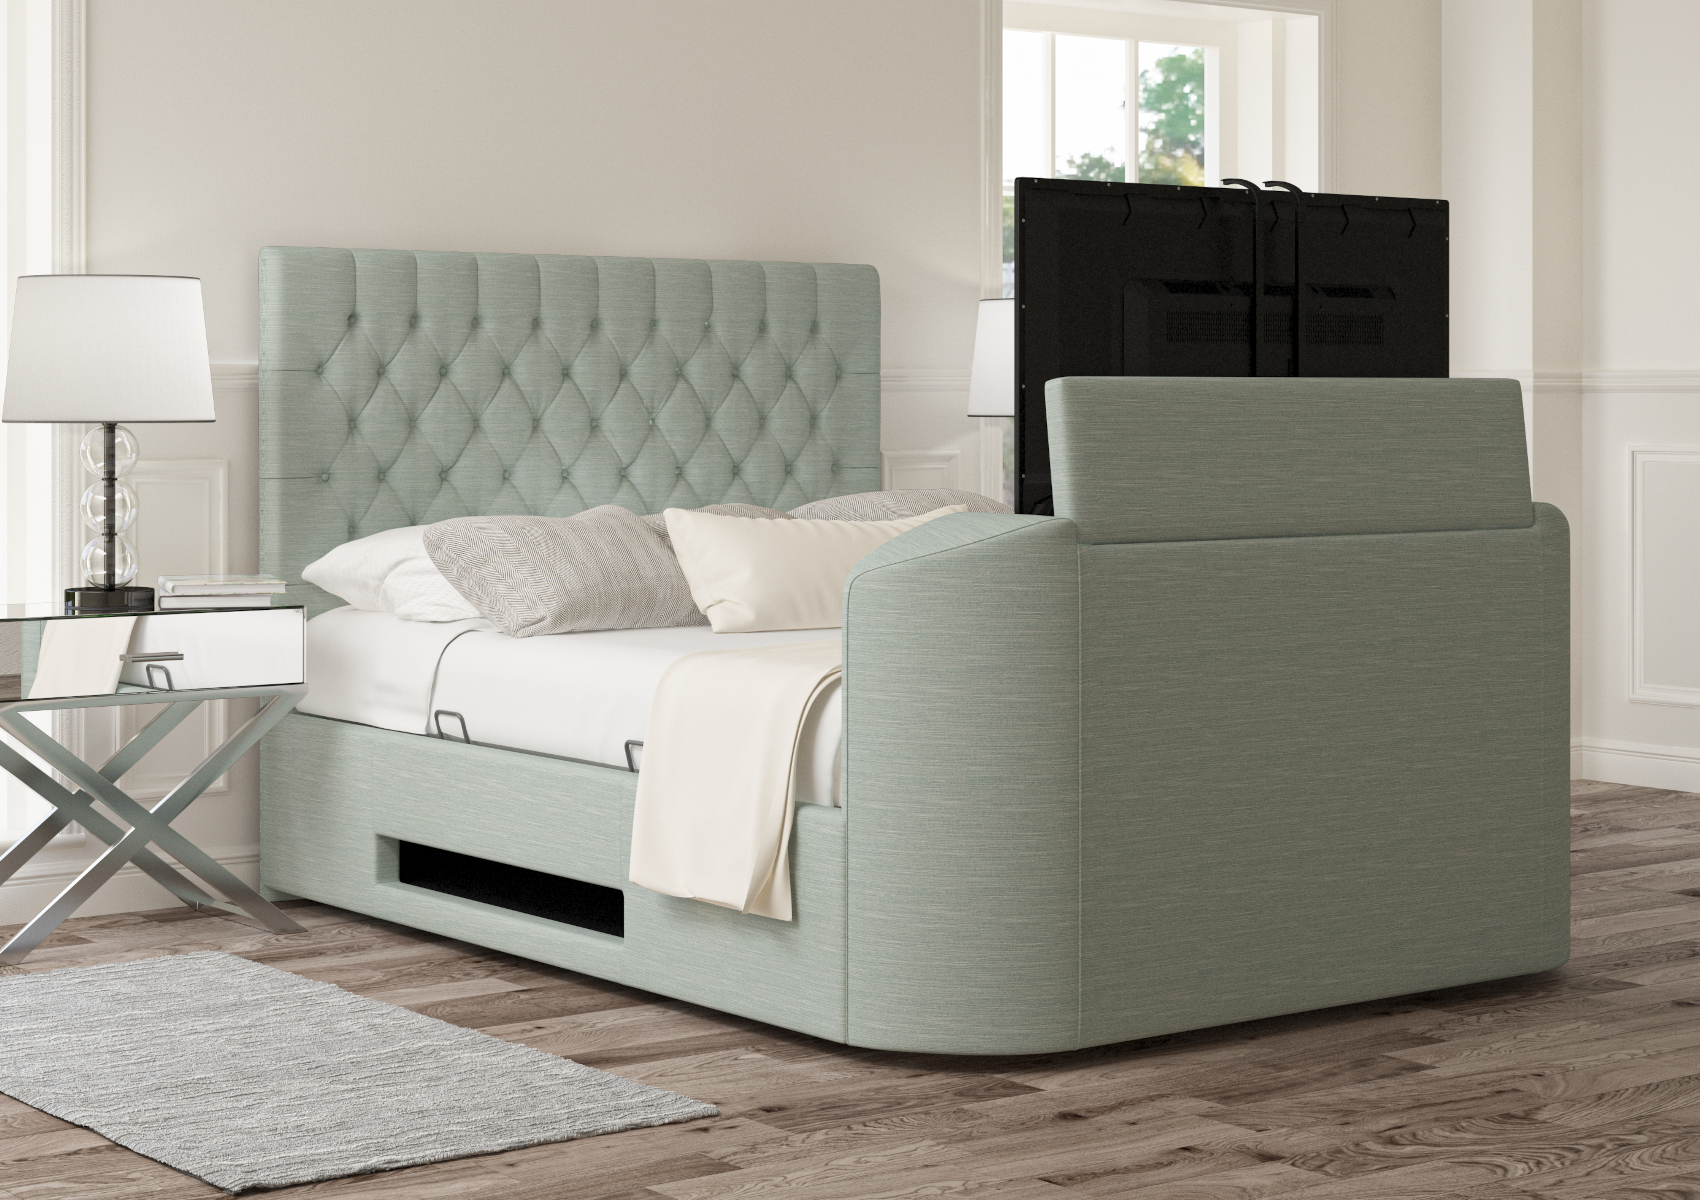 View Claridge Linea SeaBlue Upholstered Super King Multifunctional Ottoman Smart TV Bed Time4Sleep information